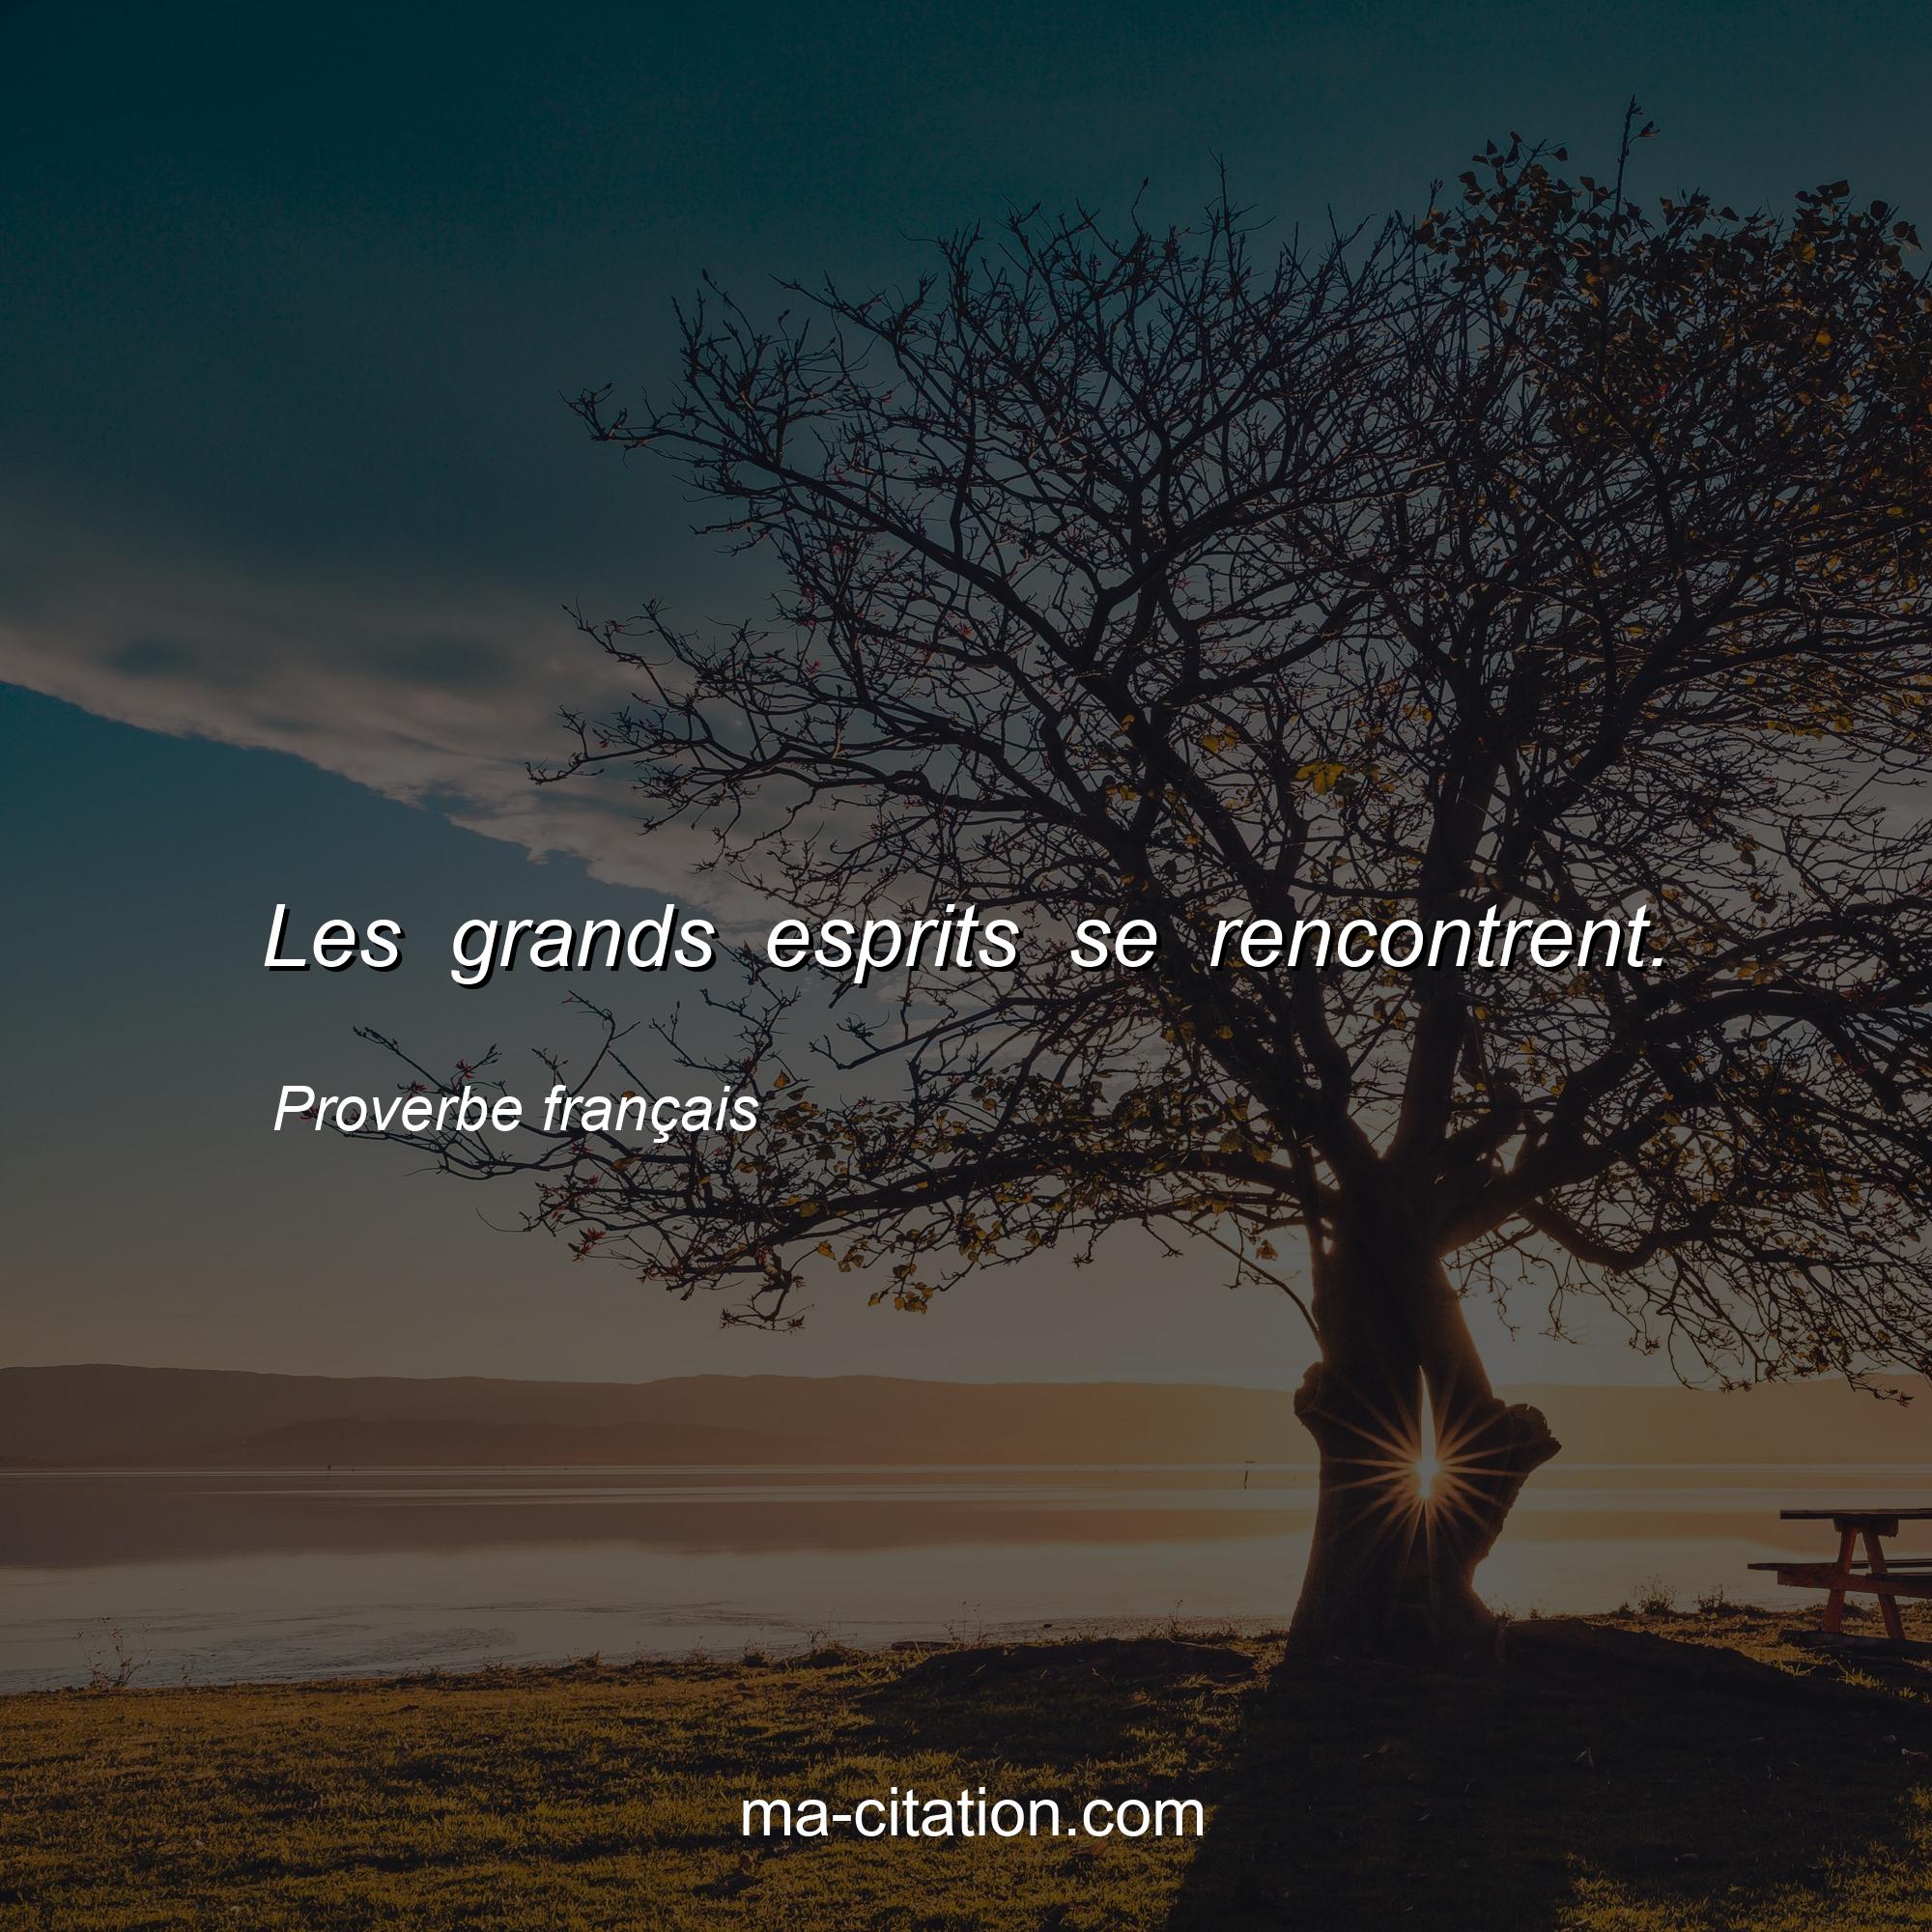 Proverbe français : Les grands esprits se rencontrent.